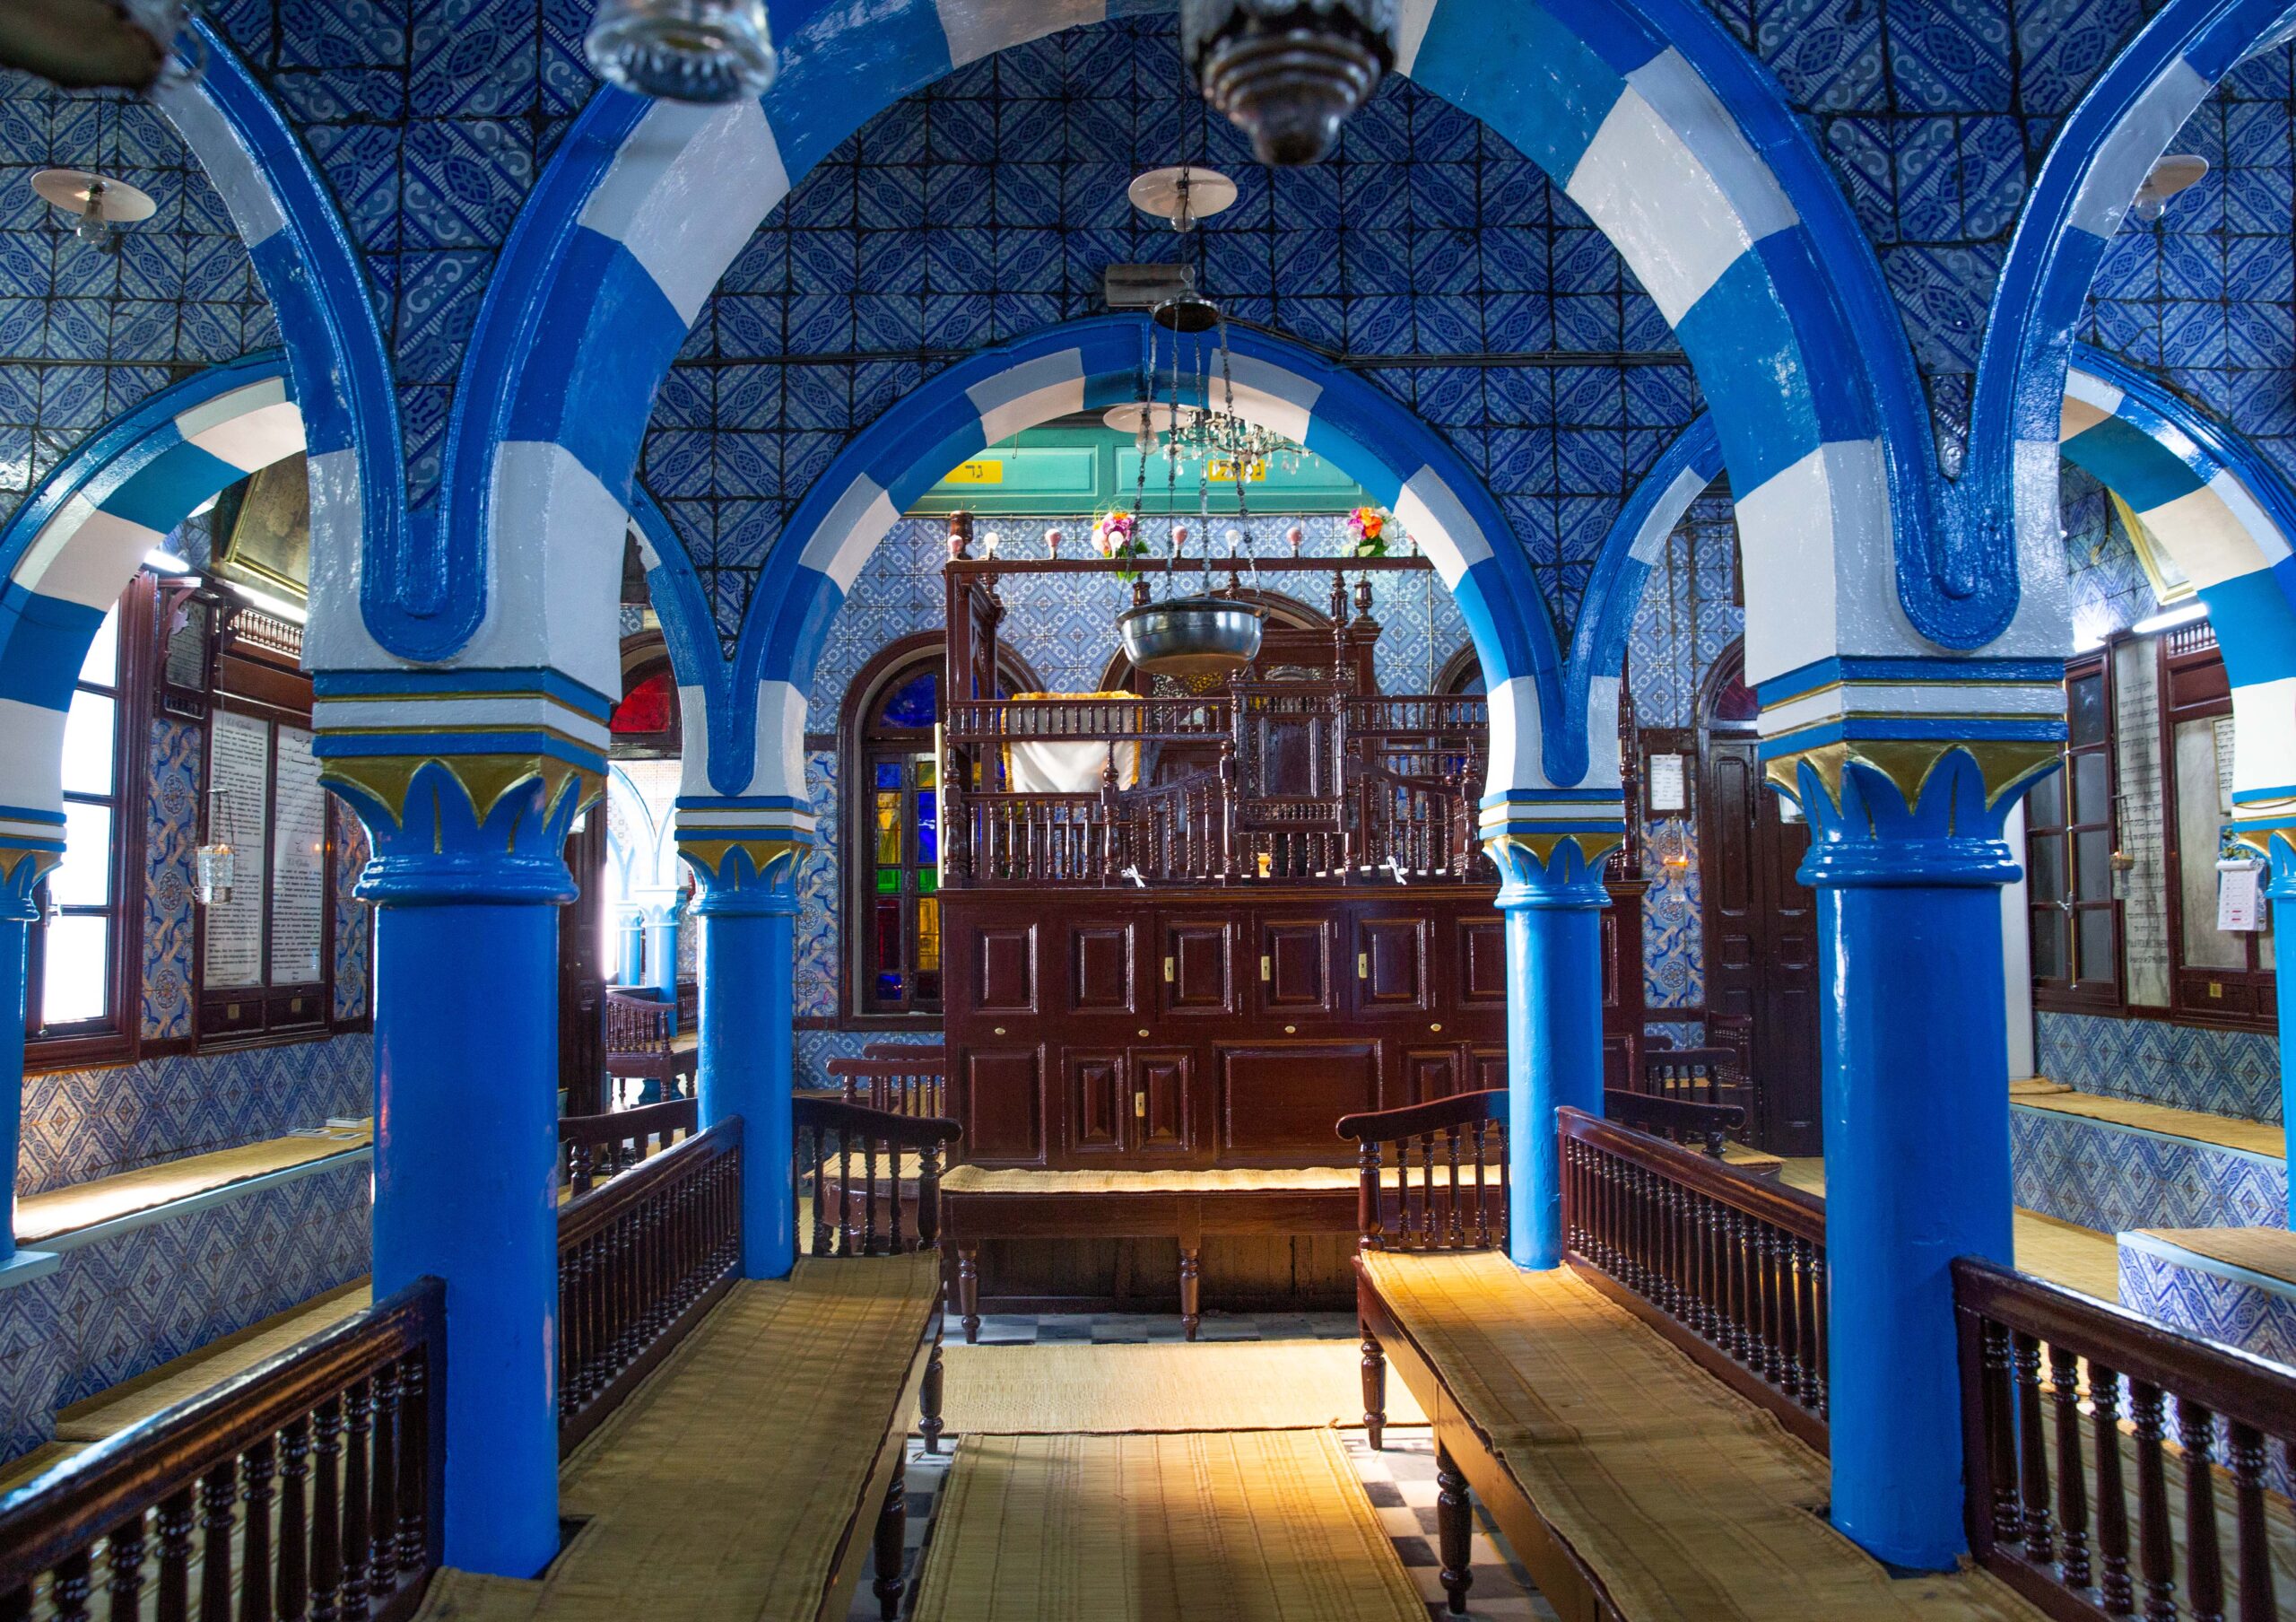 Ghriba synagogue sanctuary with view of wooden bema, 19th century, Djerba, Tunisia (photo: Ariel Fein, CC BY-NC-SA 2.0)